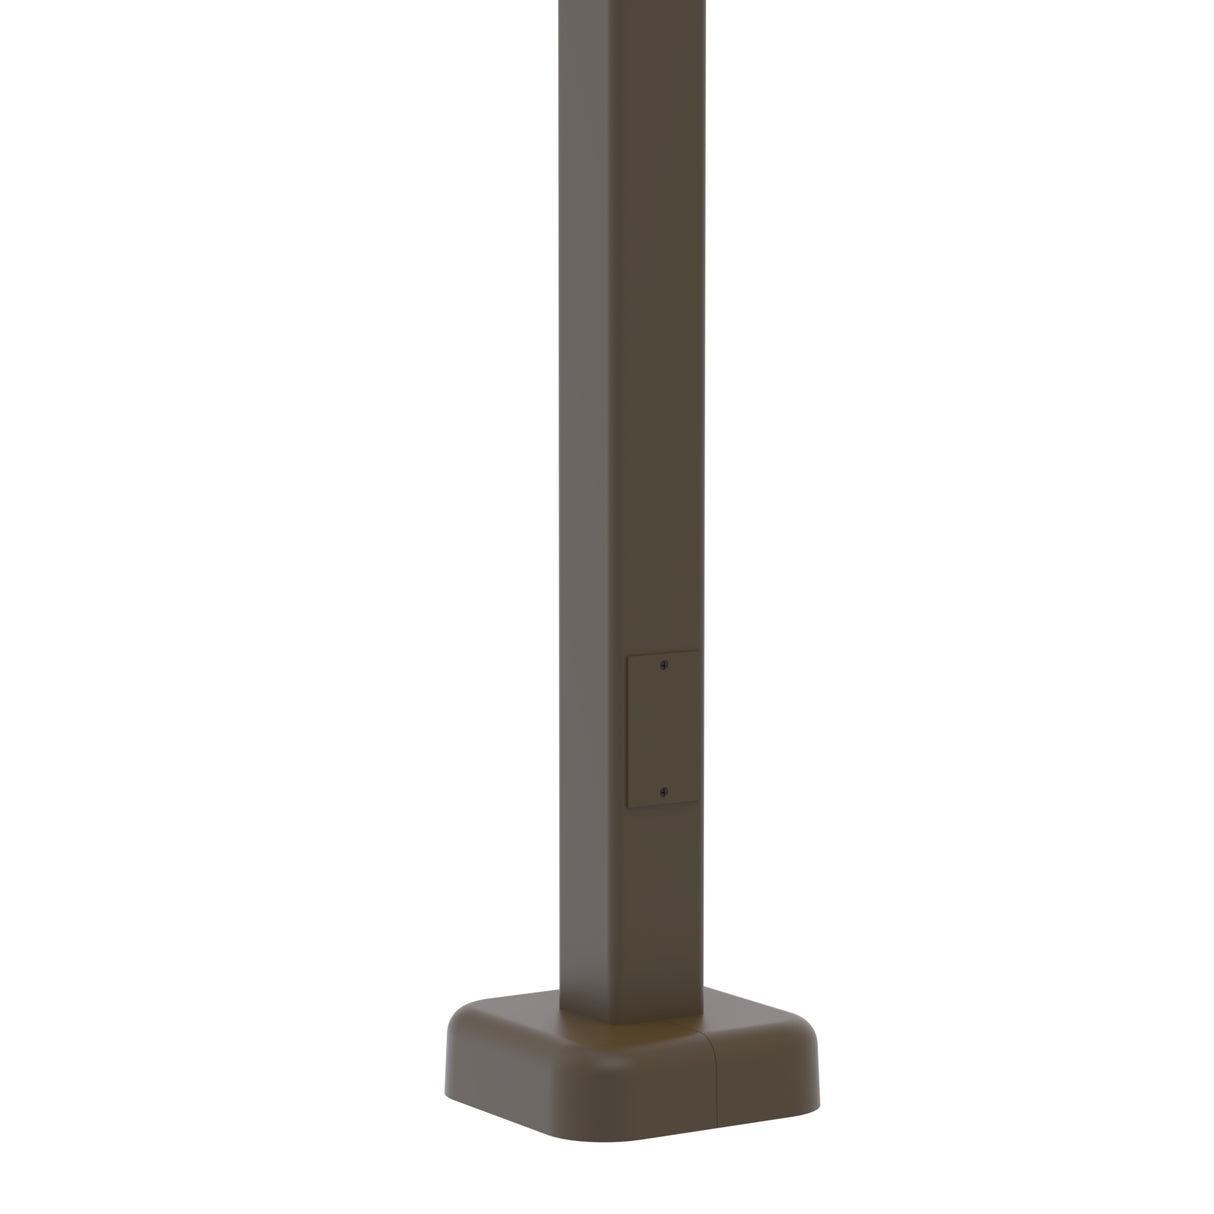 10' Tall x 4.0" OD x 0.125" Thick, Soft Square Straight Aluminum, Hinged Base Light Pole